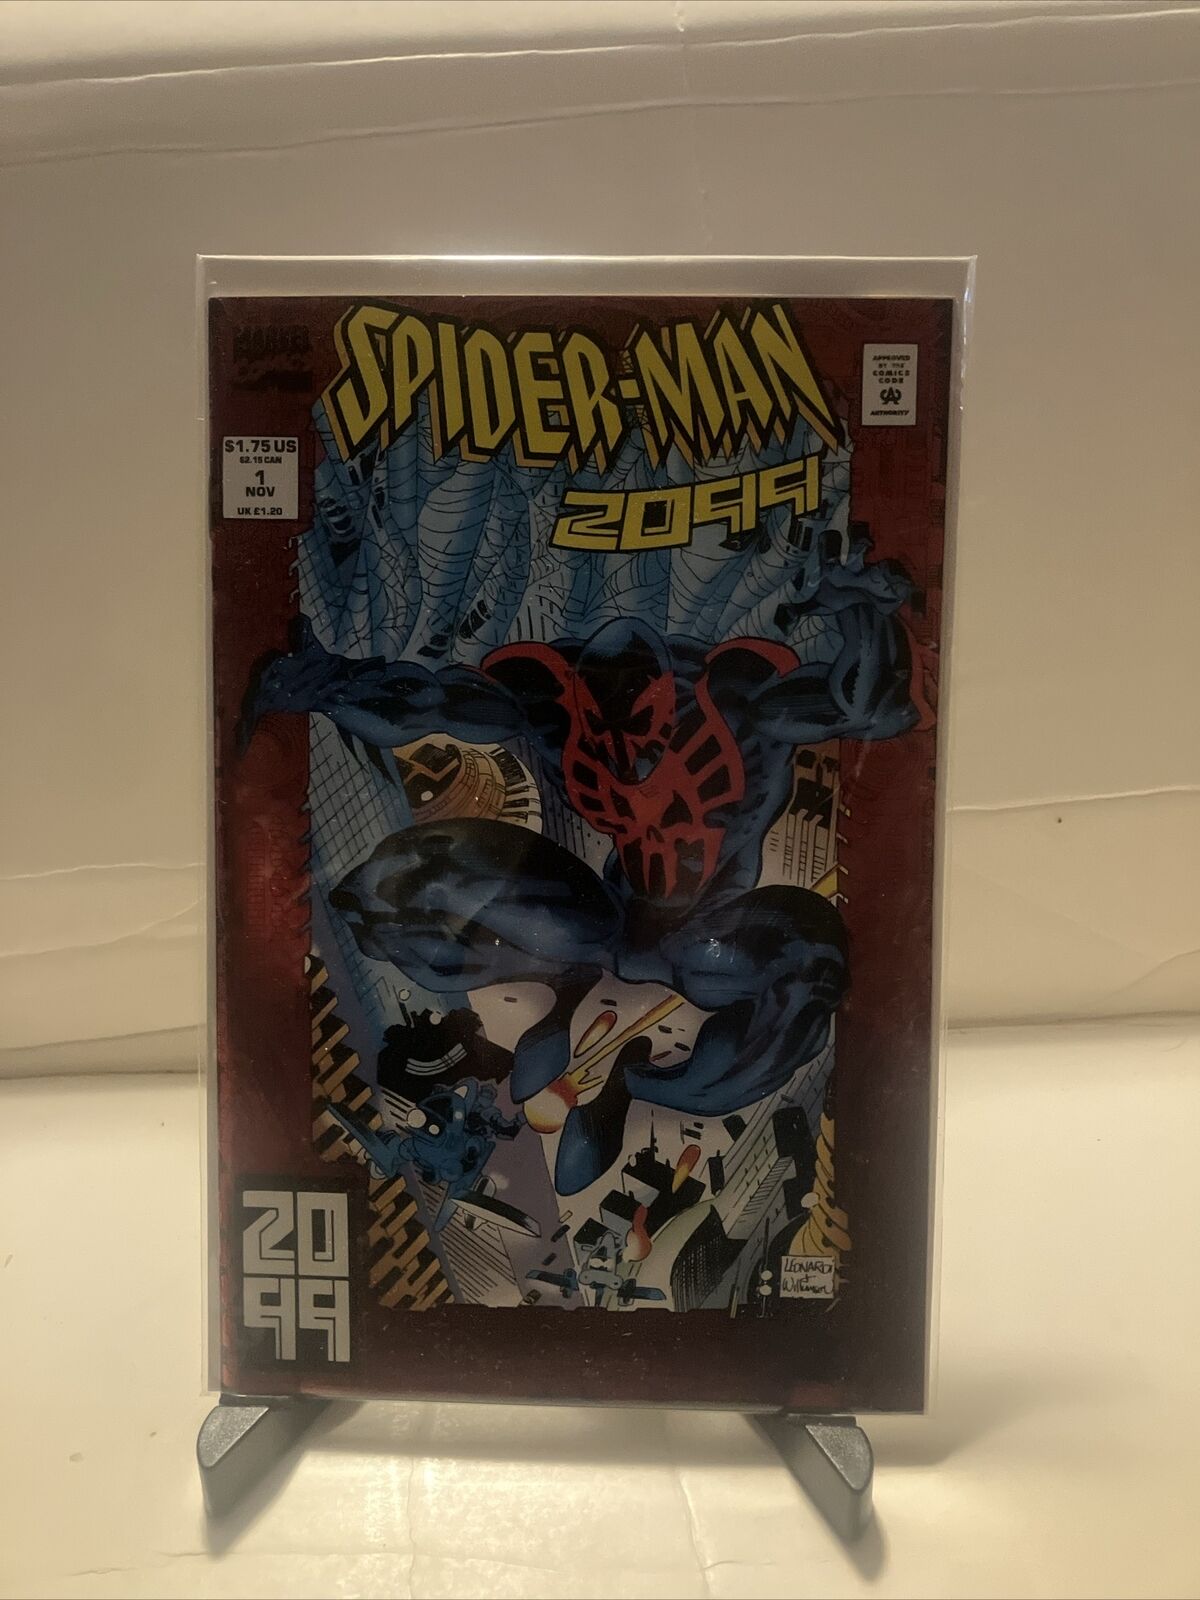 Spider-Man 2099 Classic #1 (Marvel, April 2009)